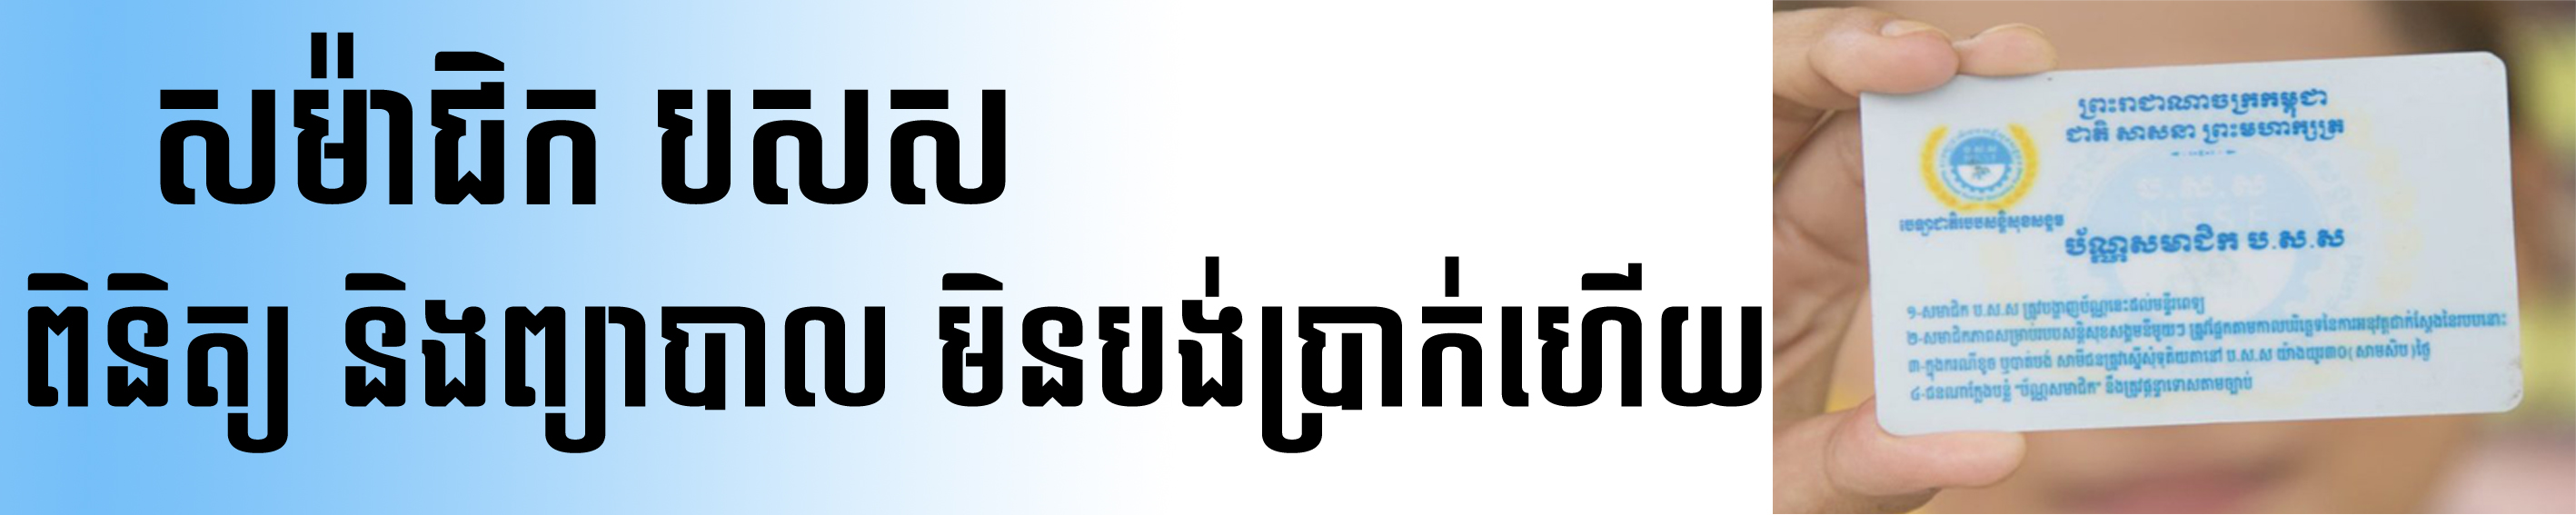 nssf_member_khmer_copy.jpg